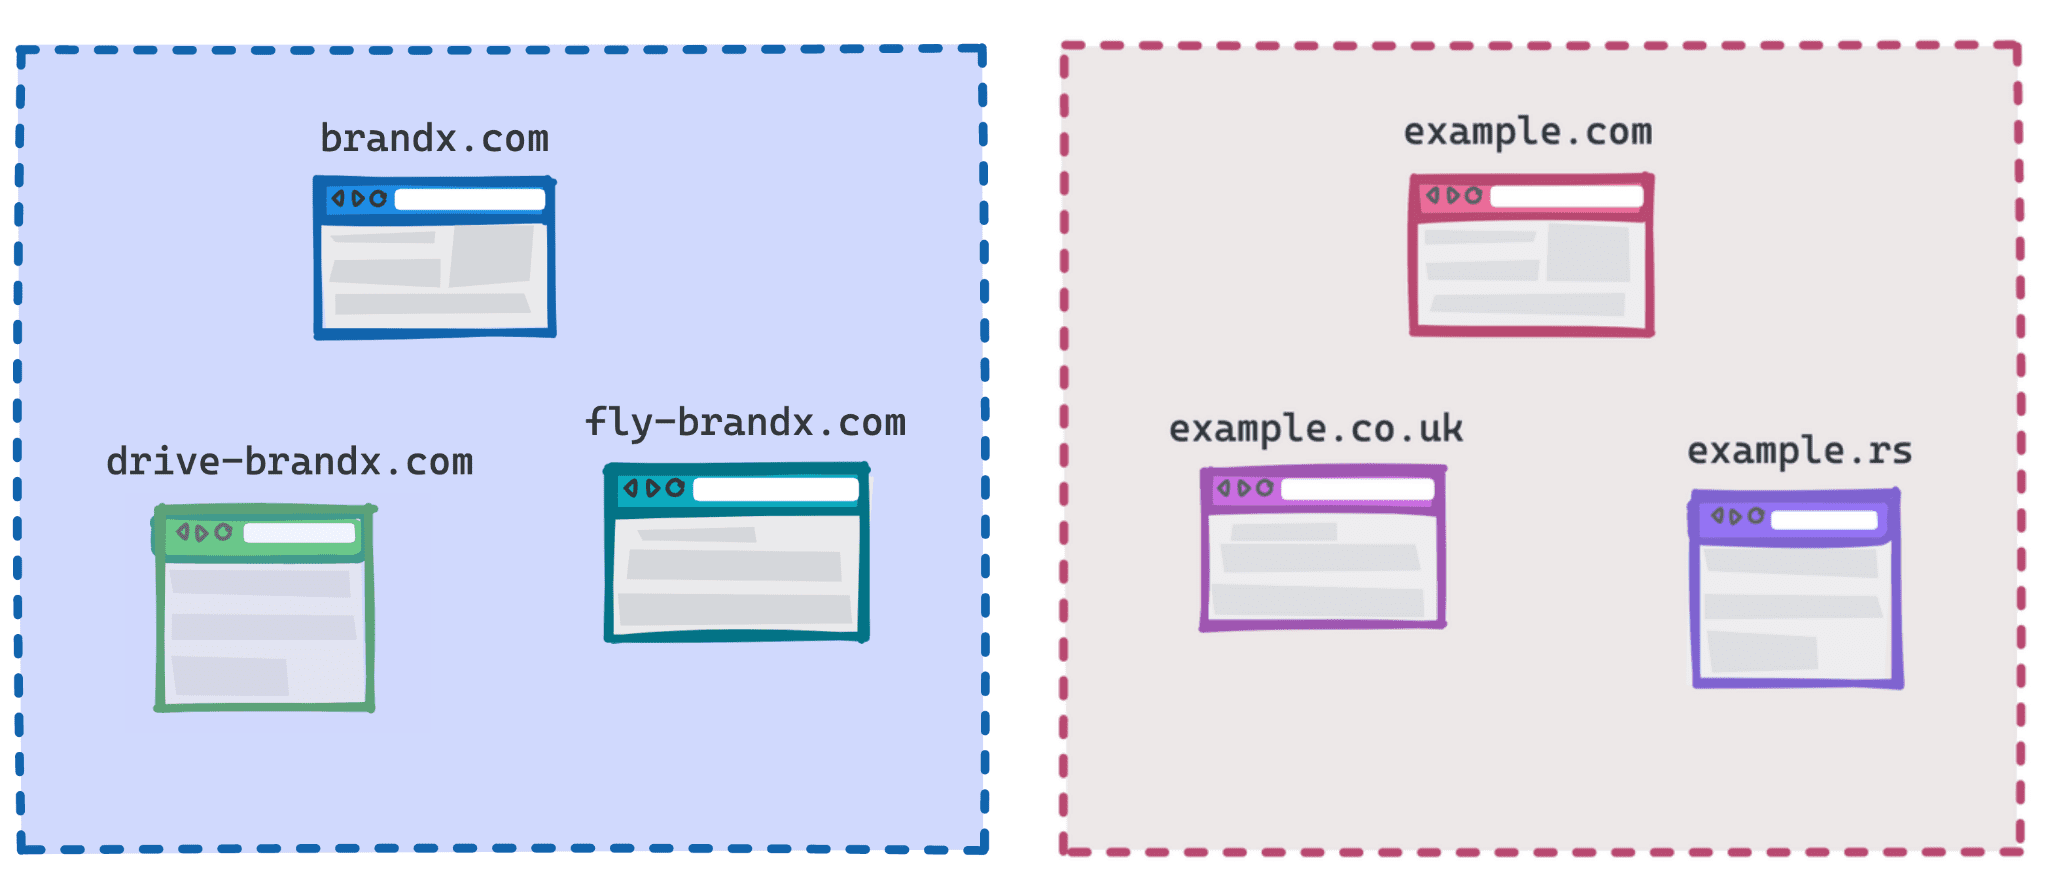 Диаграмма, на которой Brandx.com, Fly-brandx.com и Drive-brandx.com представлены как одна группа, а example.com, example.rs, example.co.uk — как другая группа.